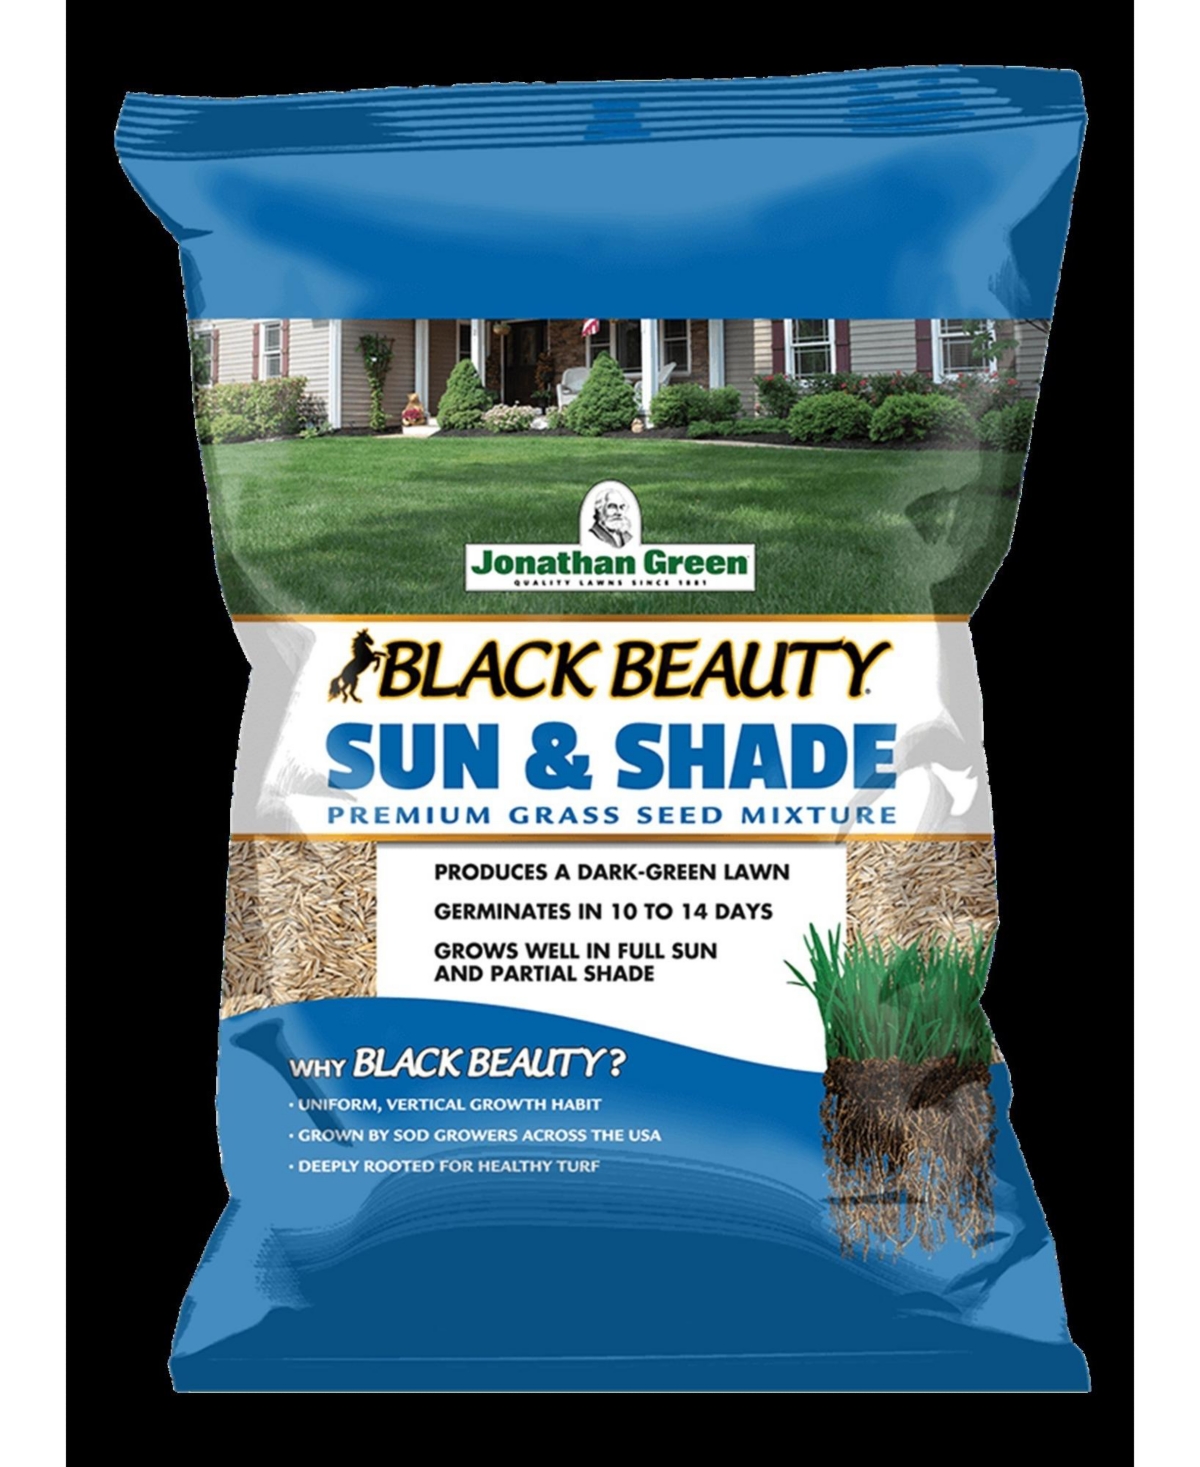 Black Beauty (#12007) Sun & Shade Seed Mix, 50 lb bag - Brown